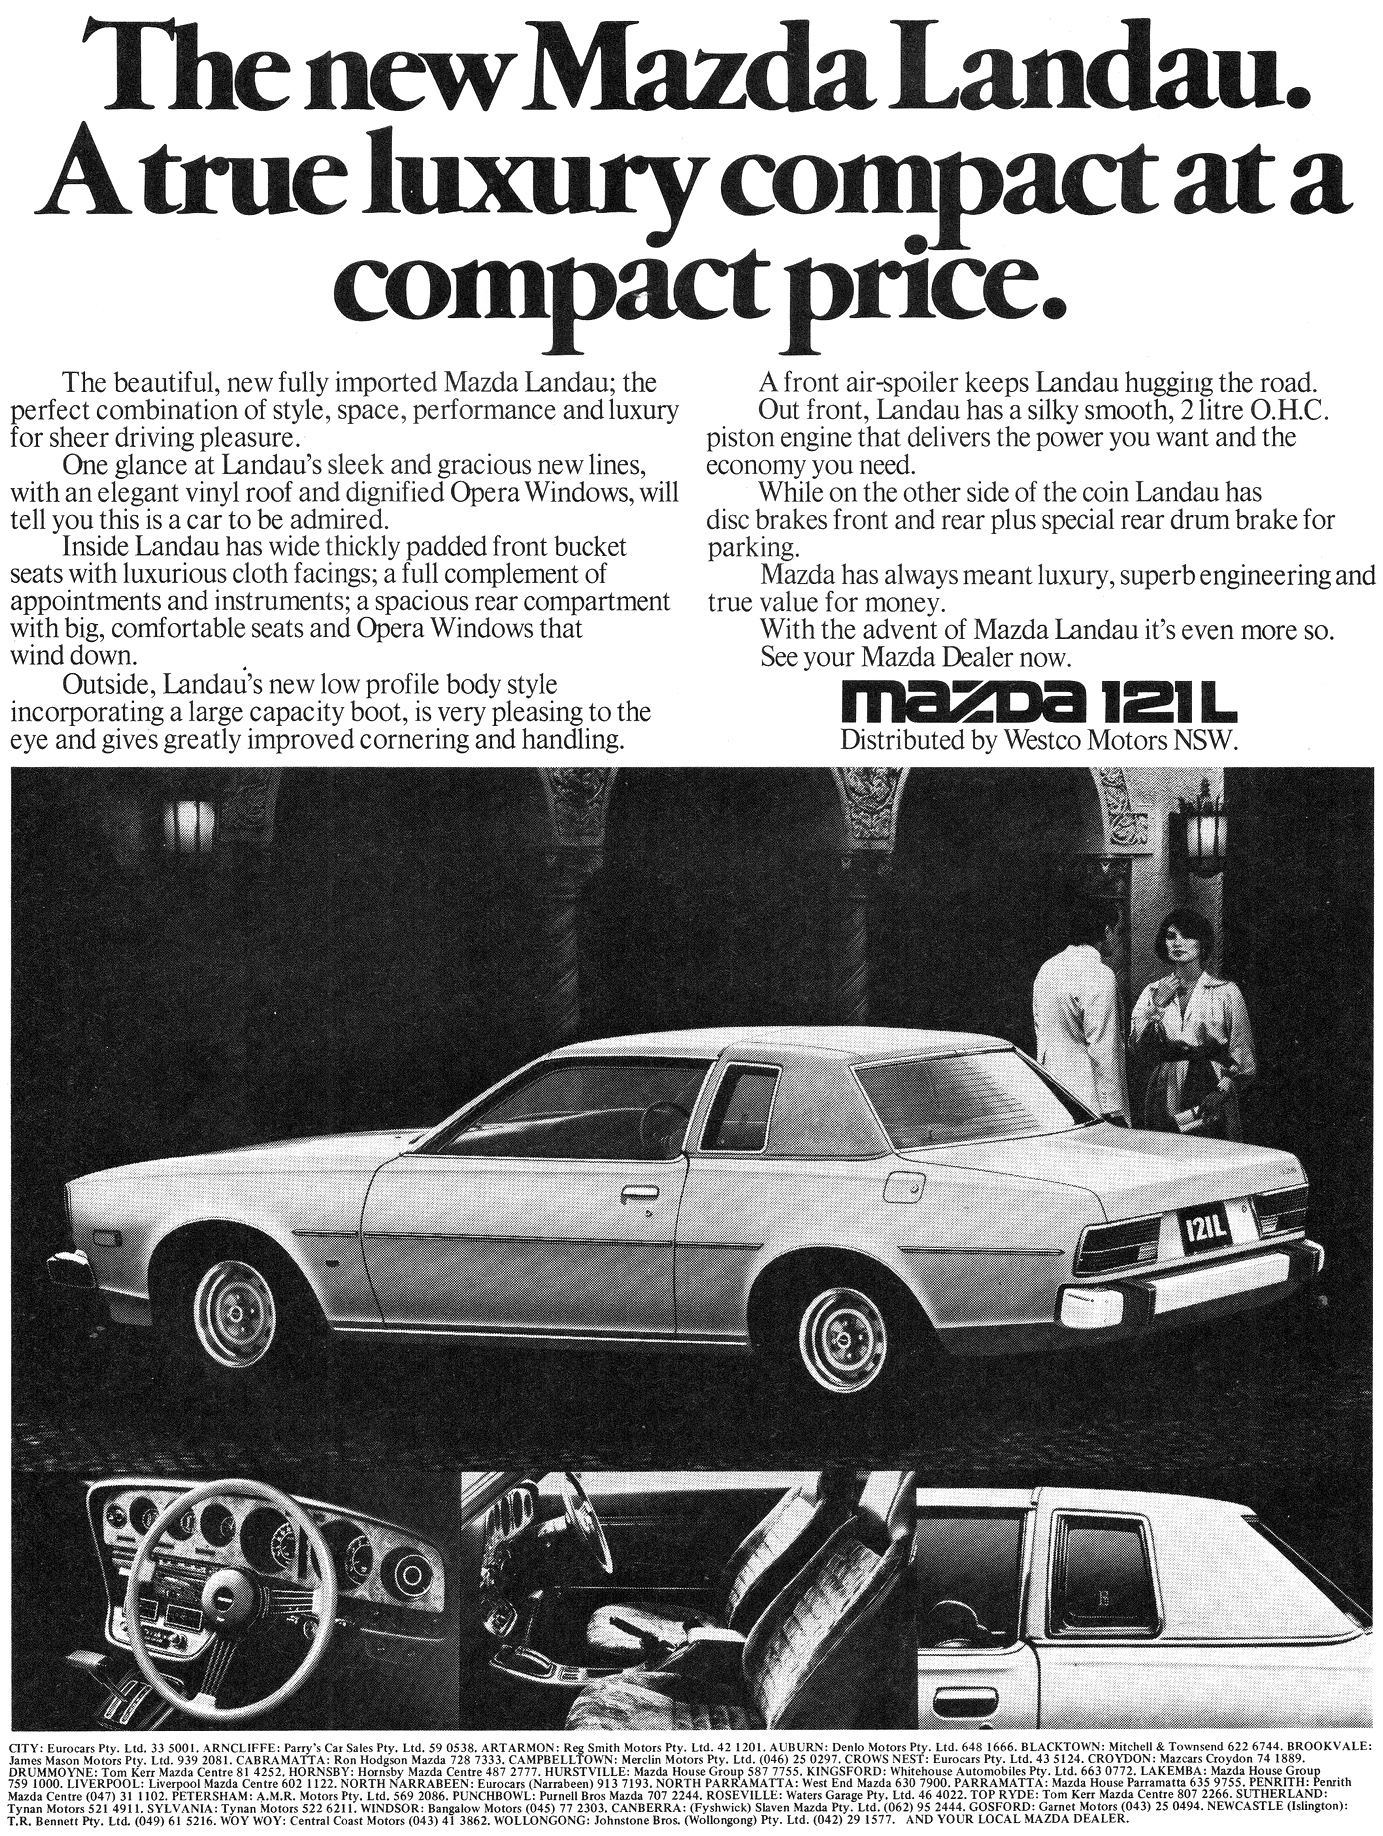 1978 Mazda 121L Landau Coupe